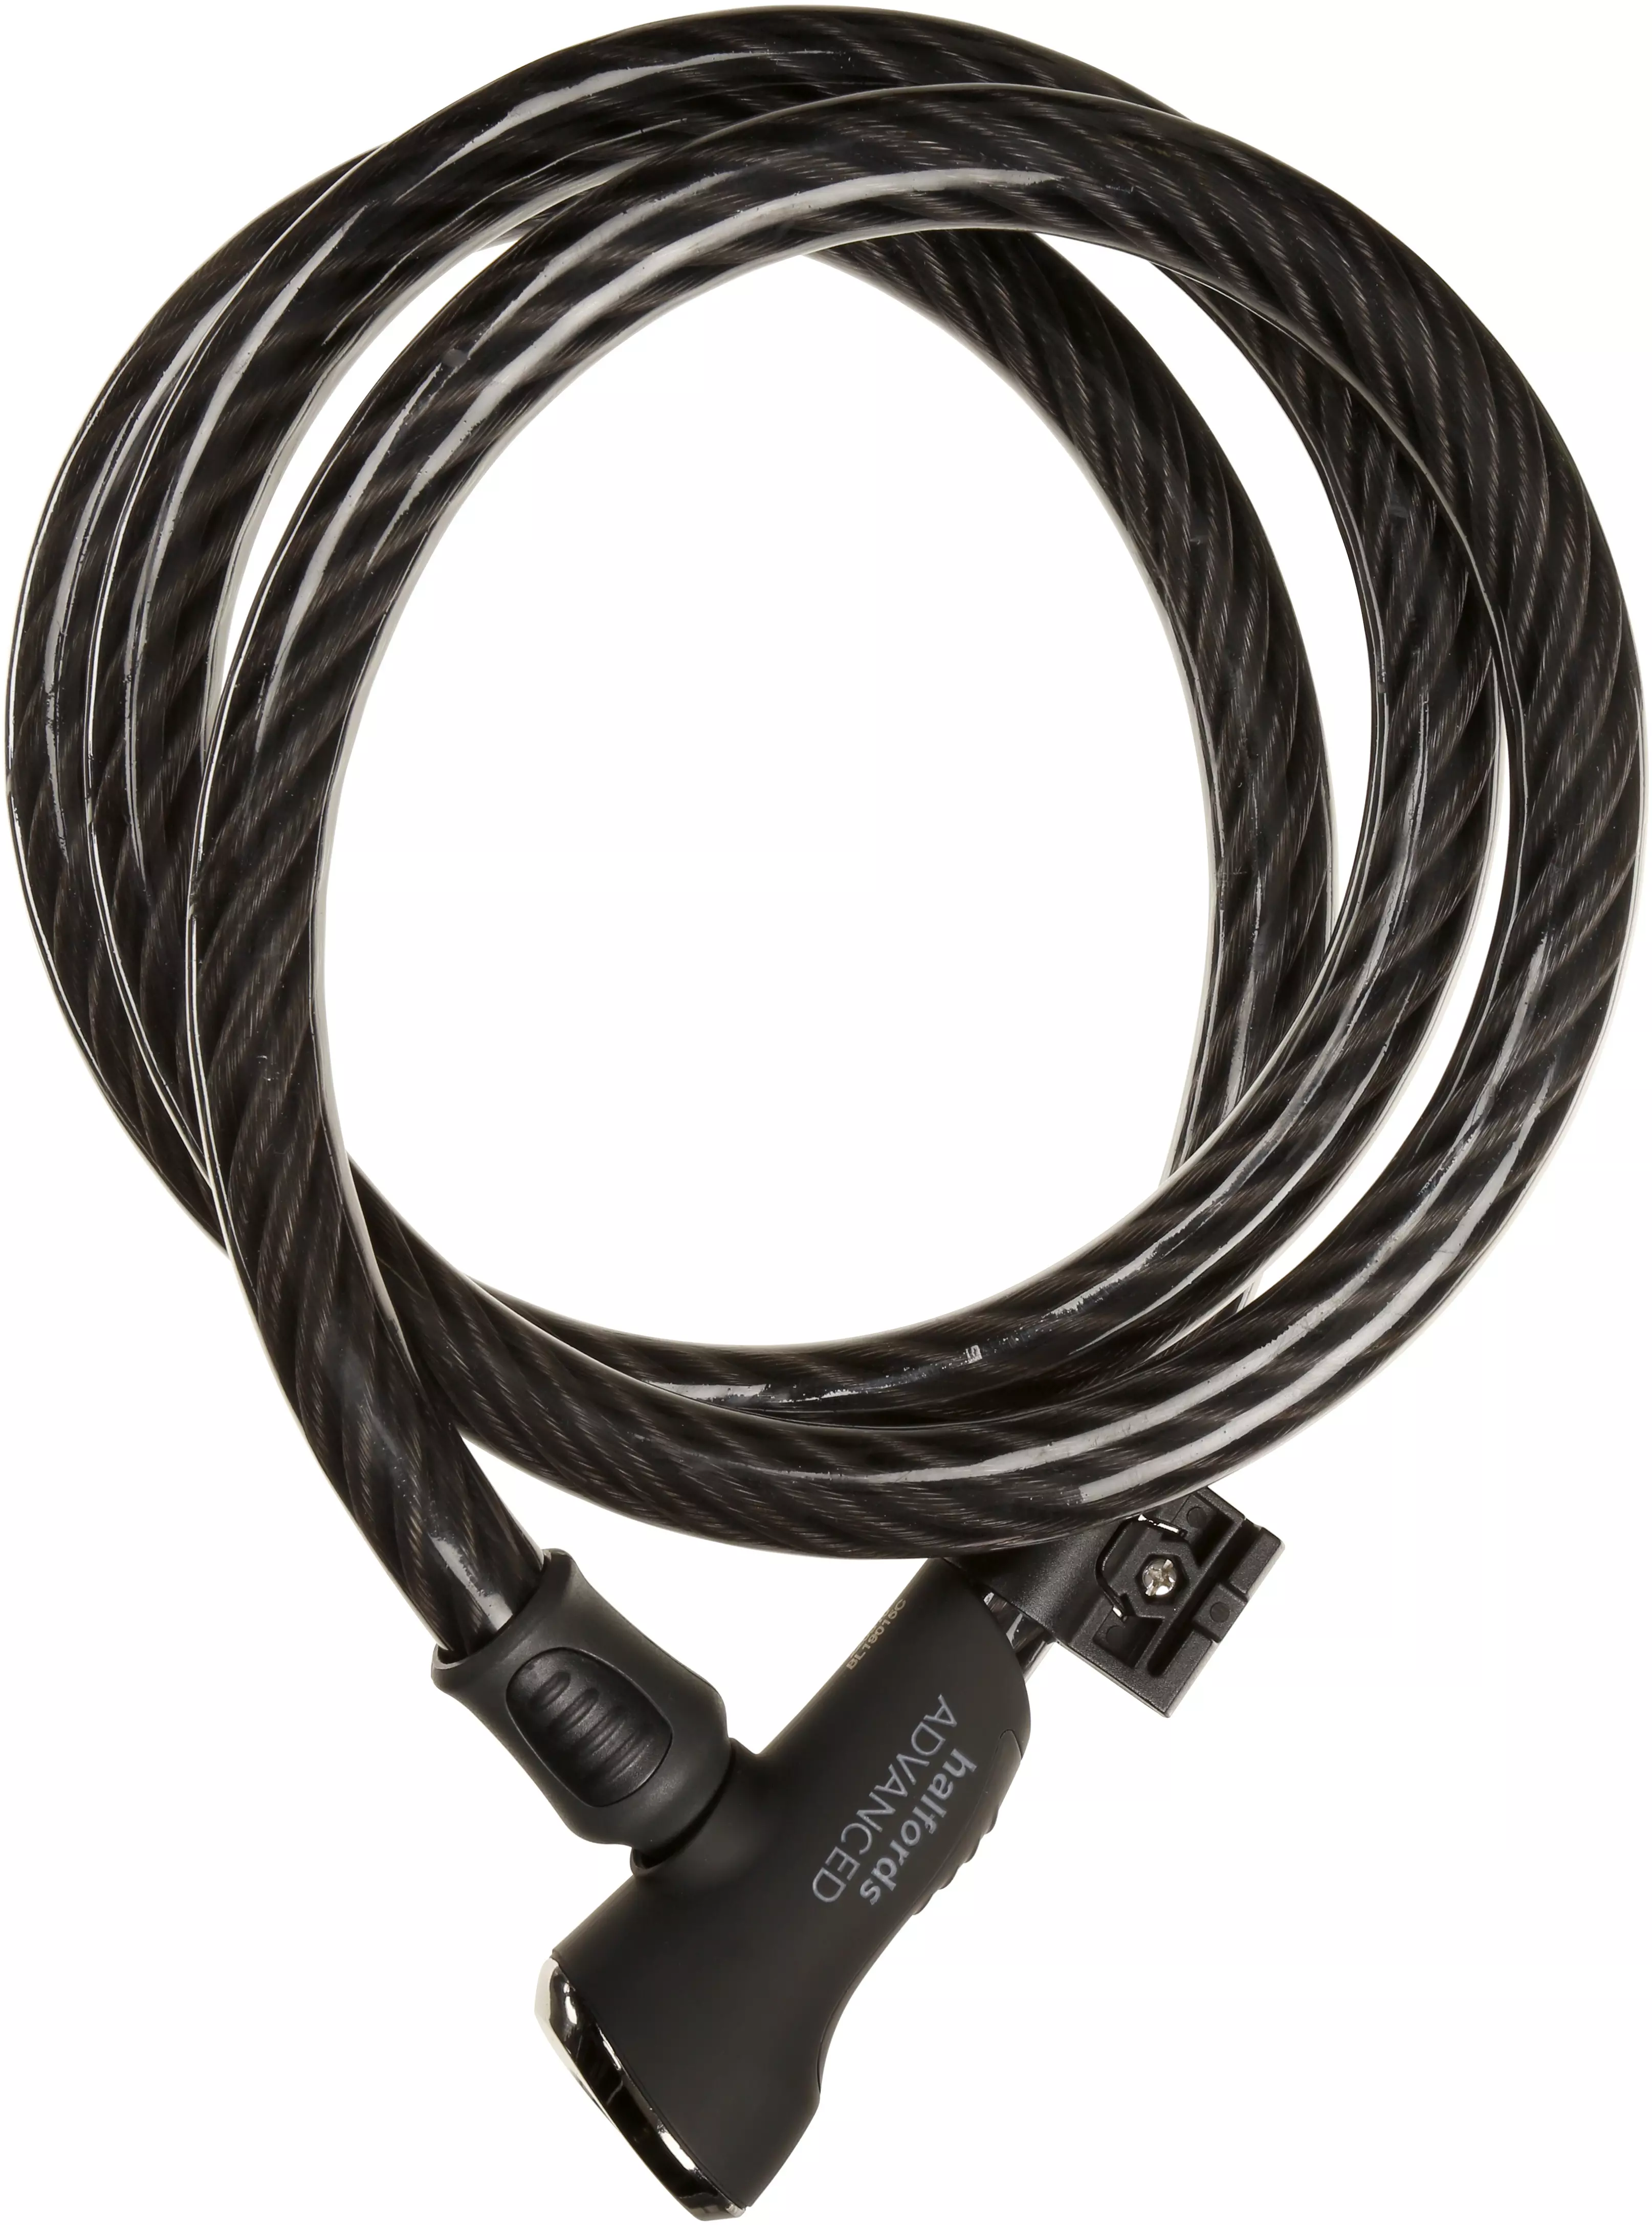 halfords gear cable